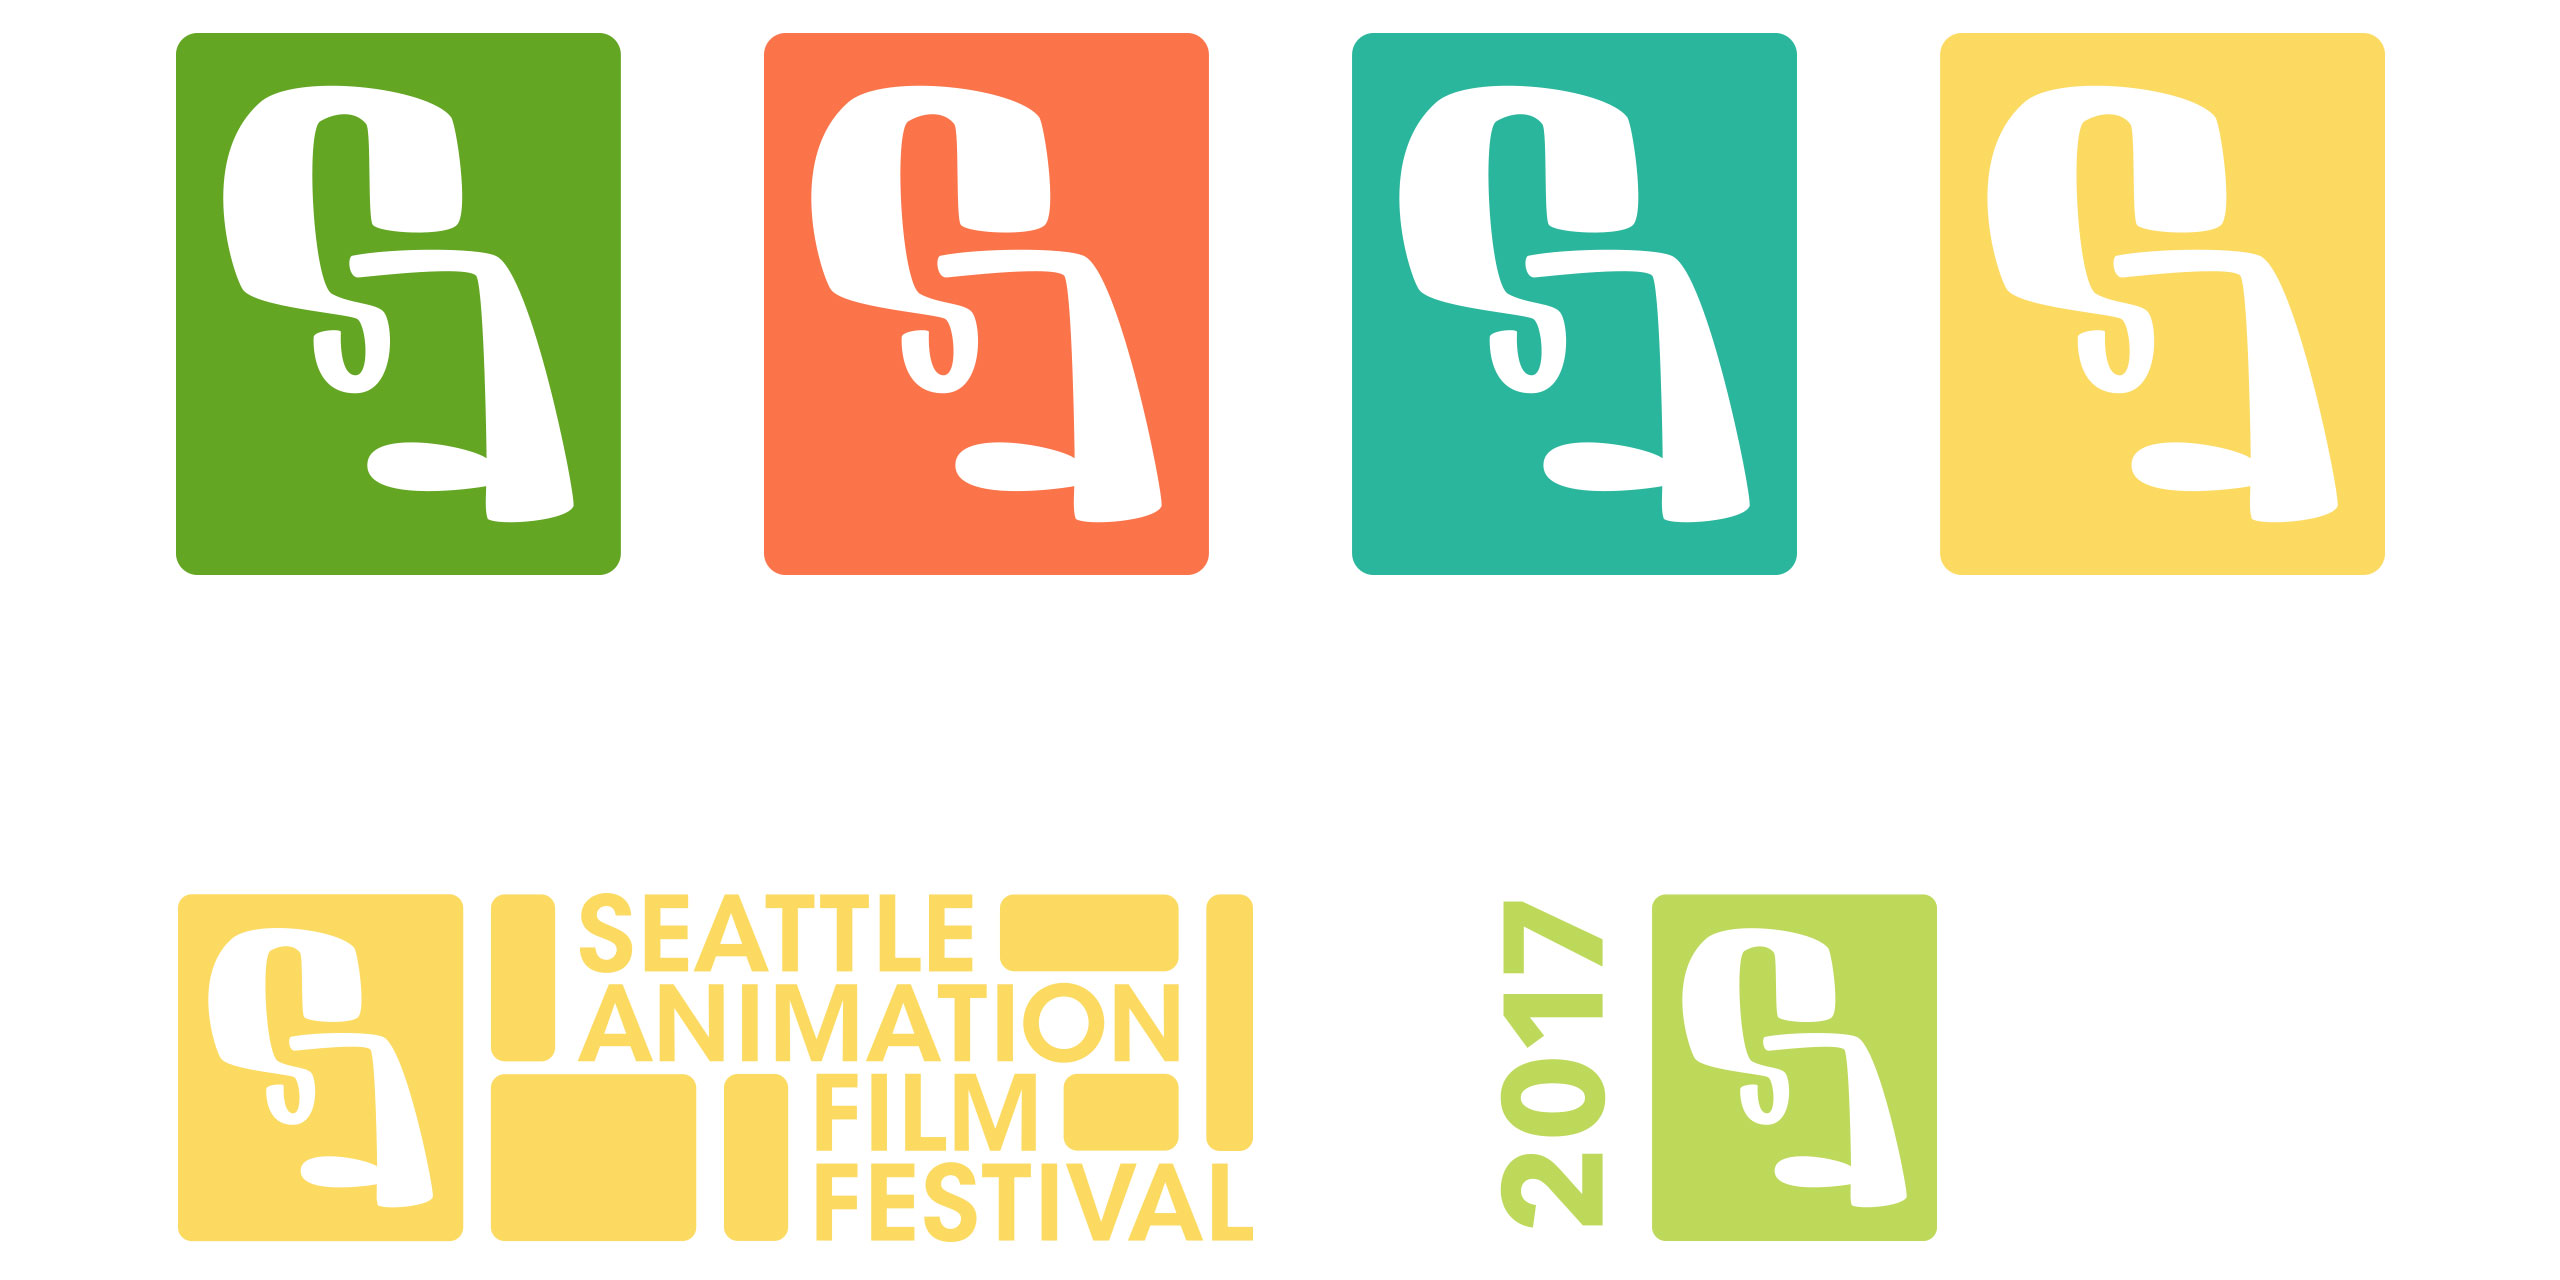 The Seattle Animation Film Festival by Lauren Ezerins